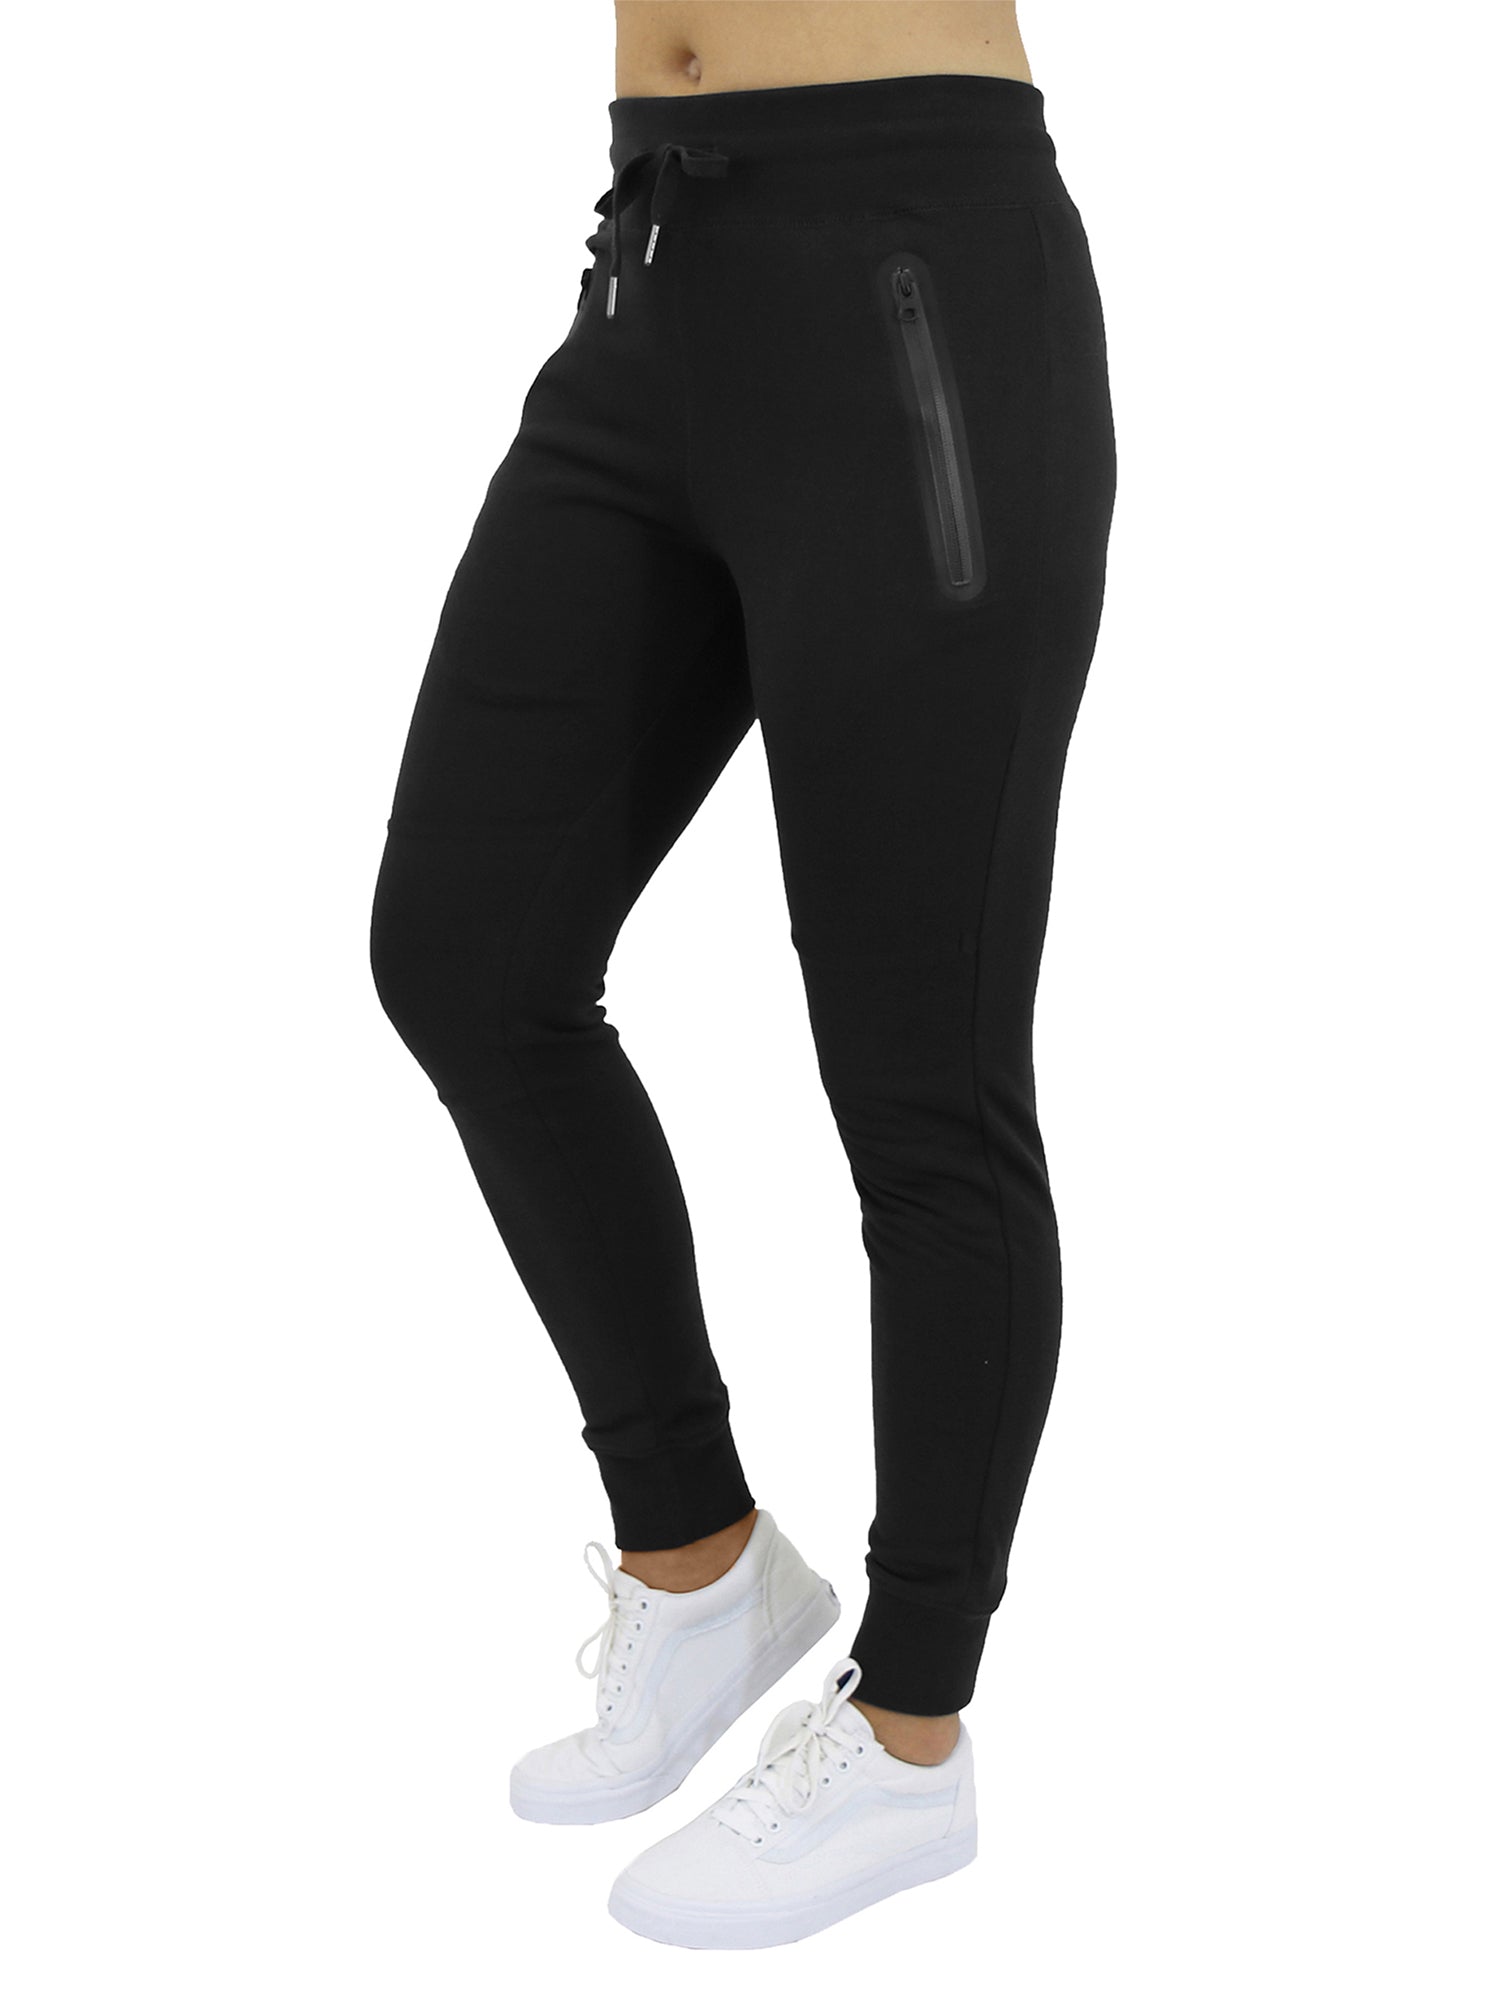 Zhrill Pants Joggers Womens Large Zip Pocket Black Elastic Pull On W:32  N226